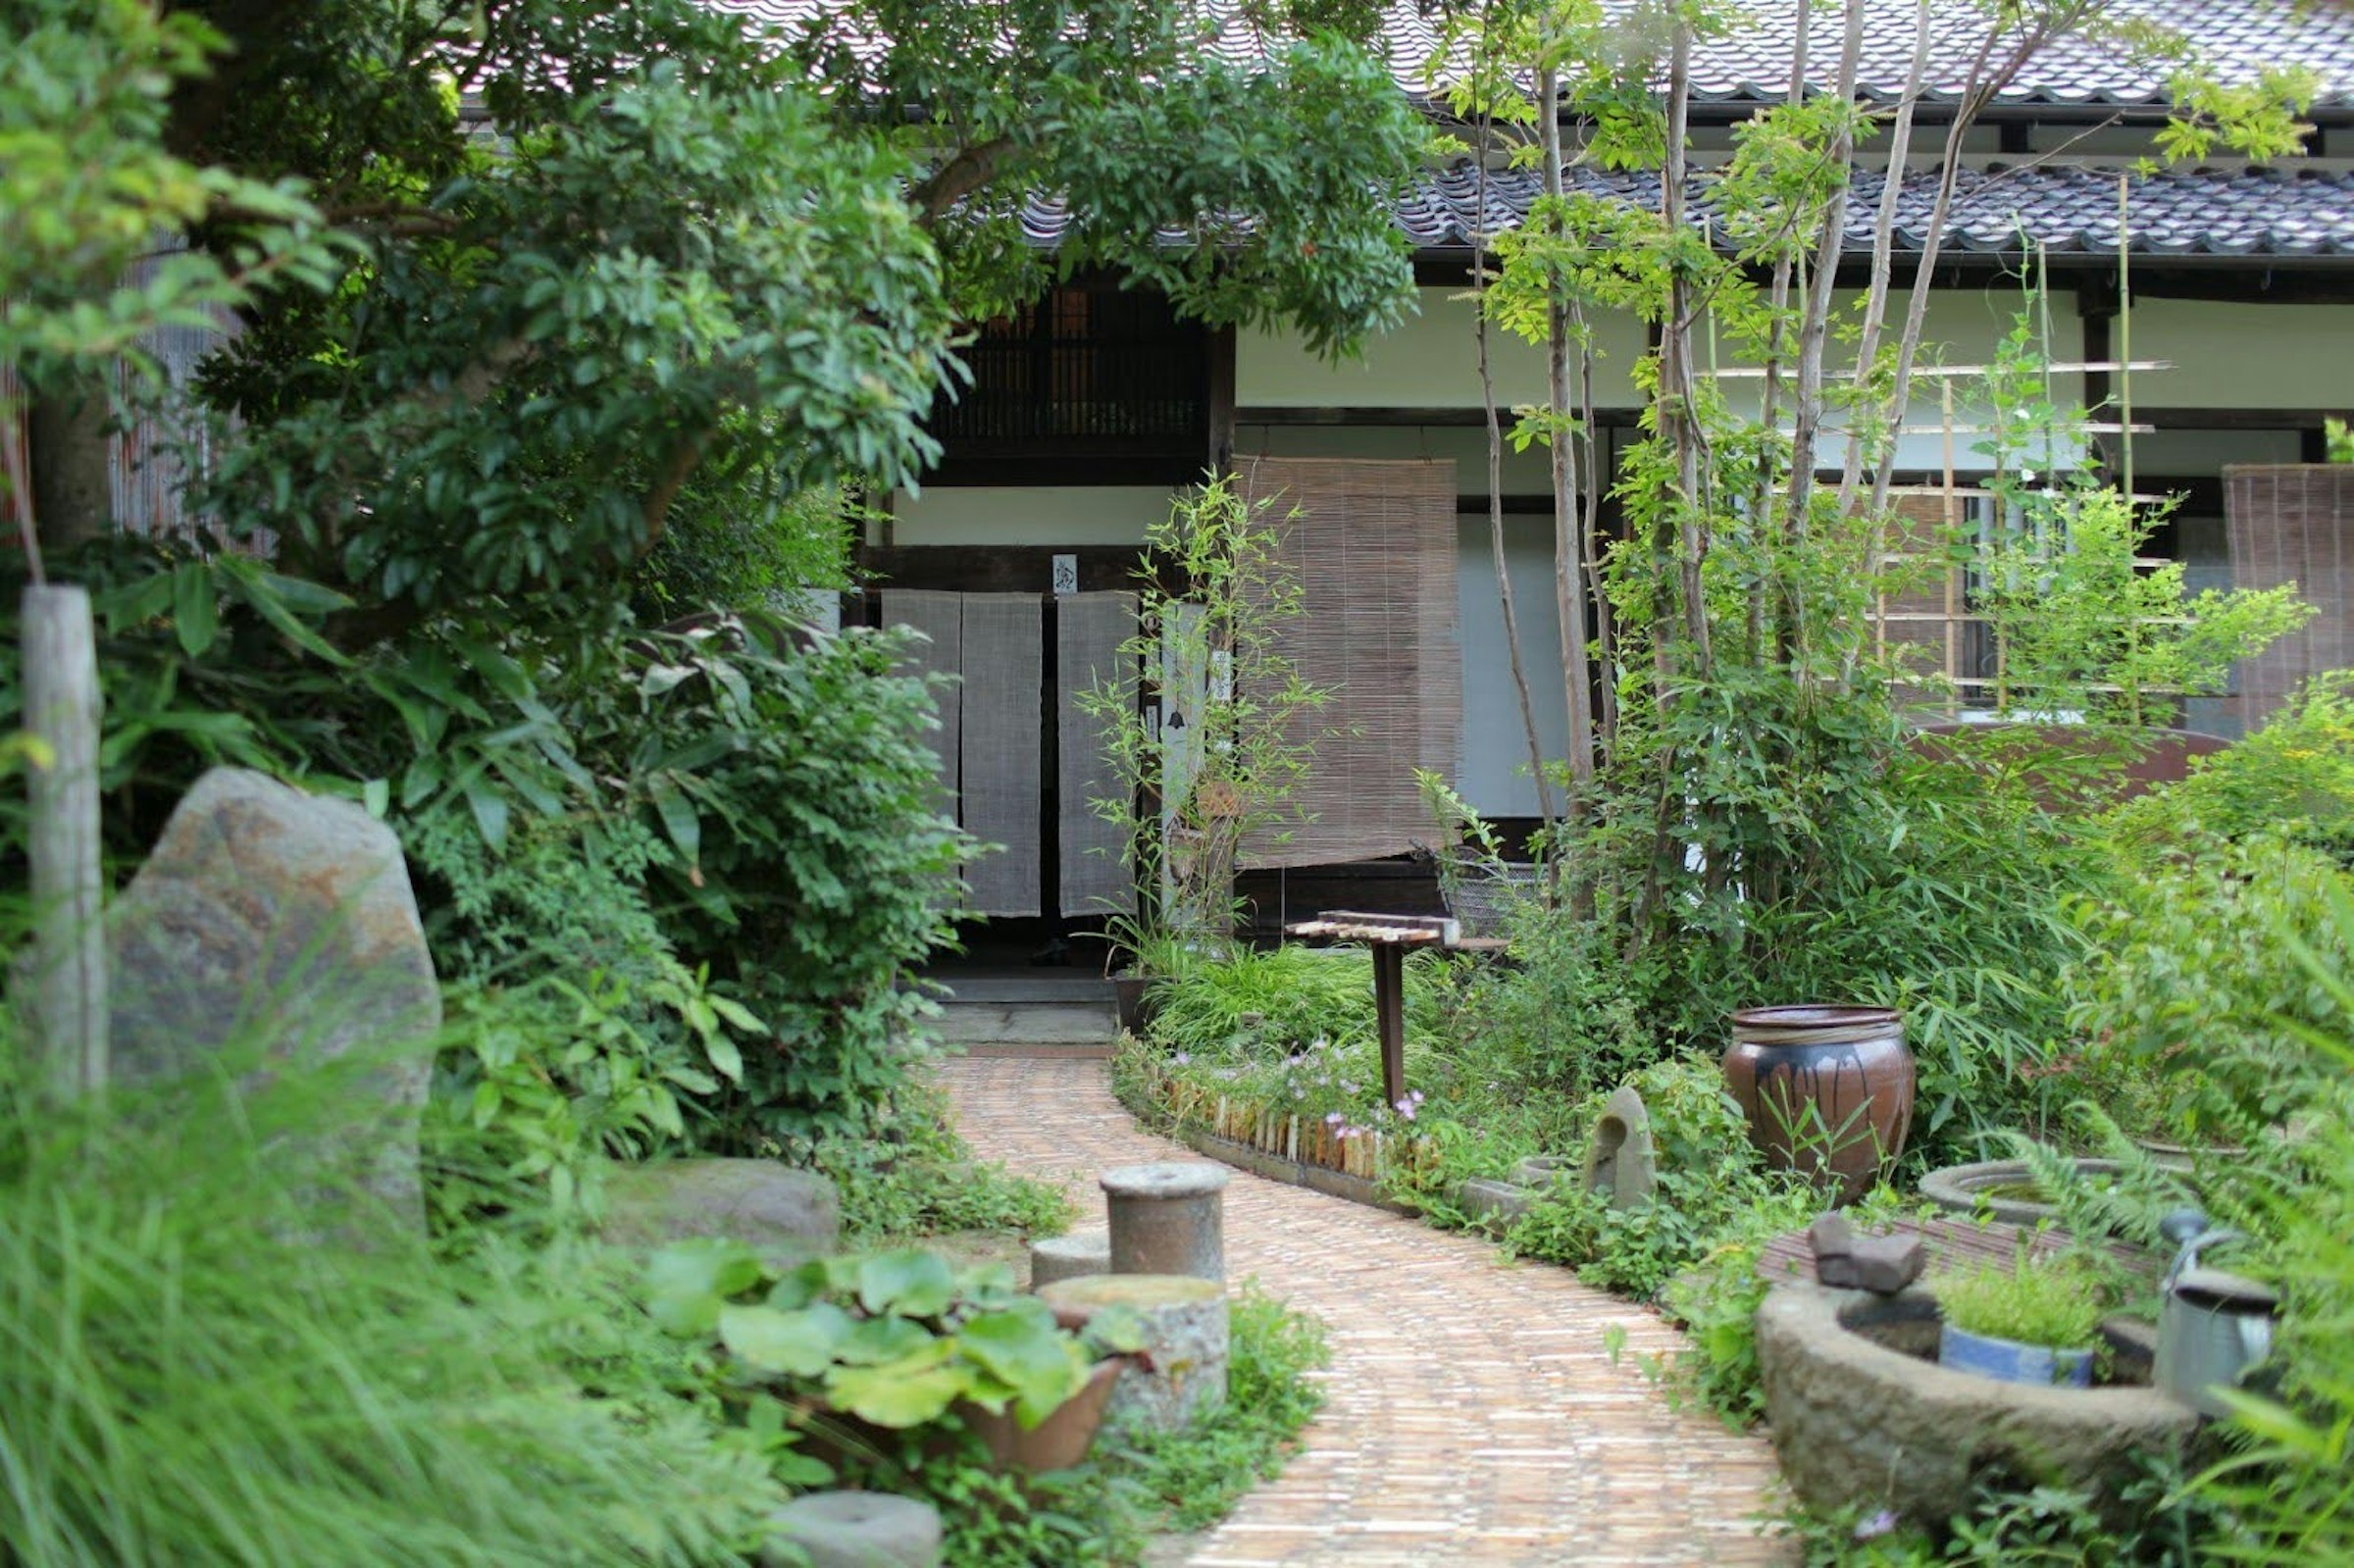 The lodge 'Kurasu Yado Takyo Abeke' operated by the same company